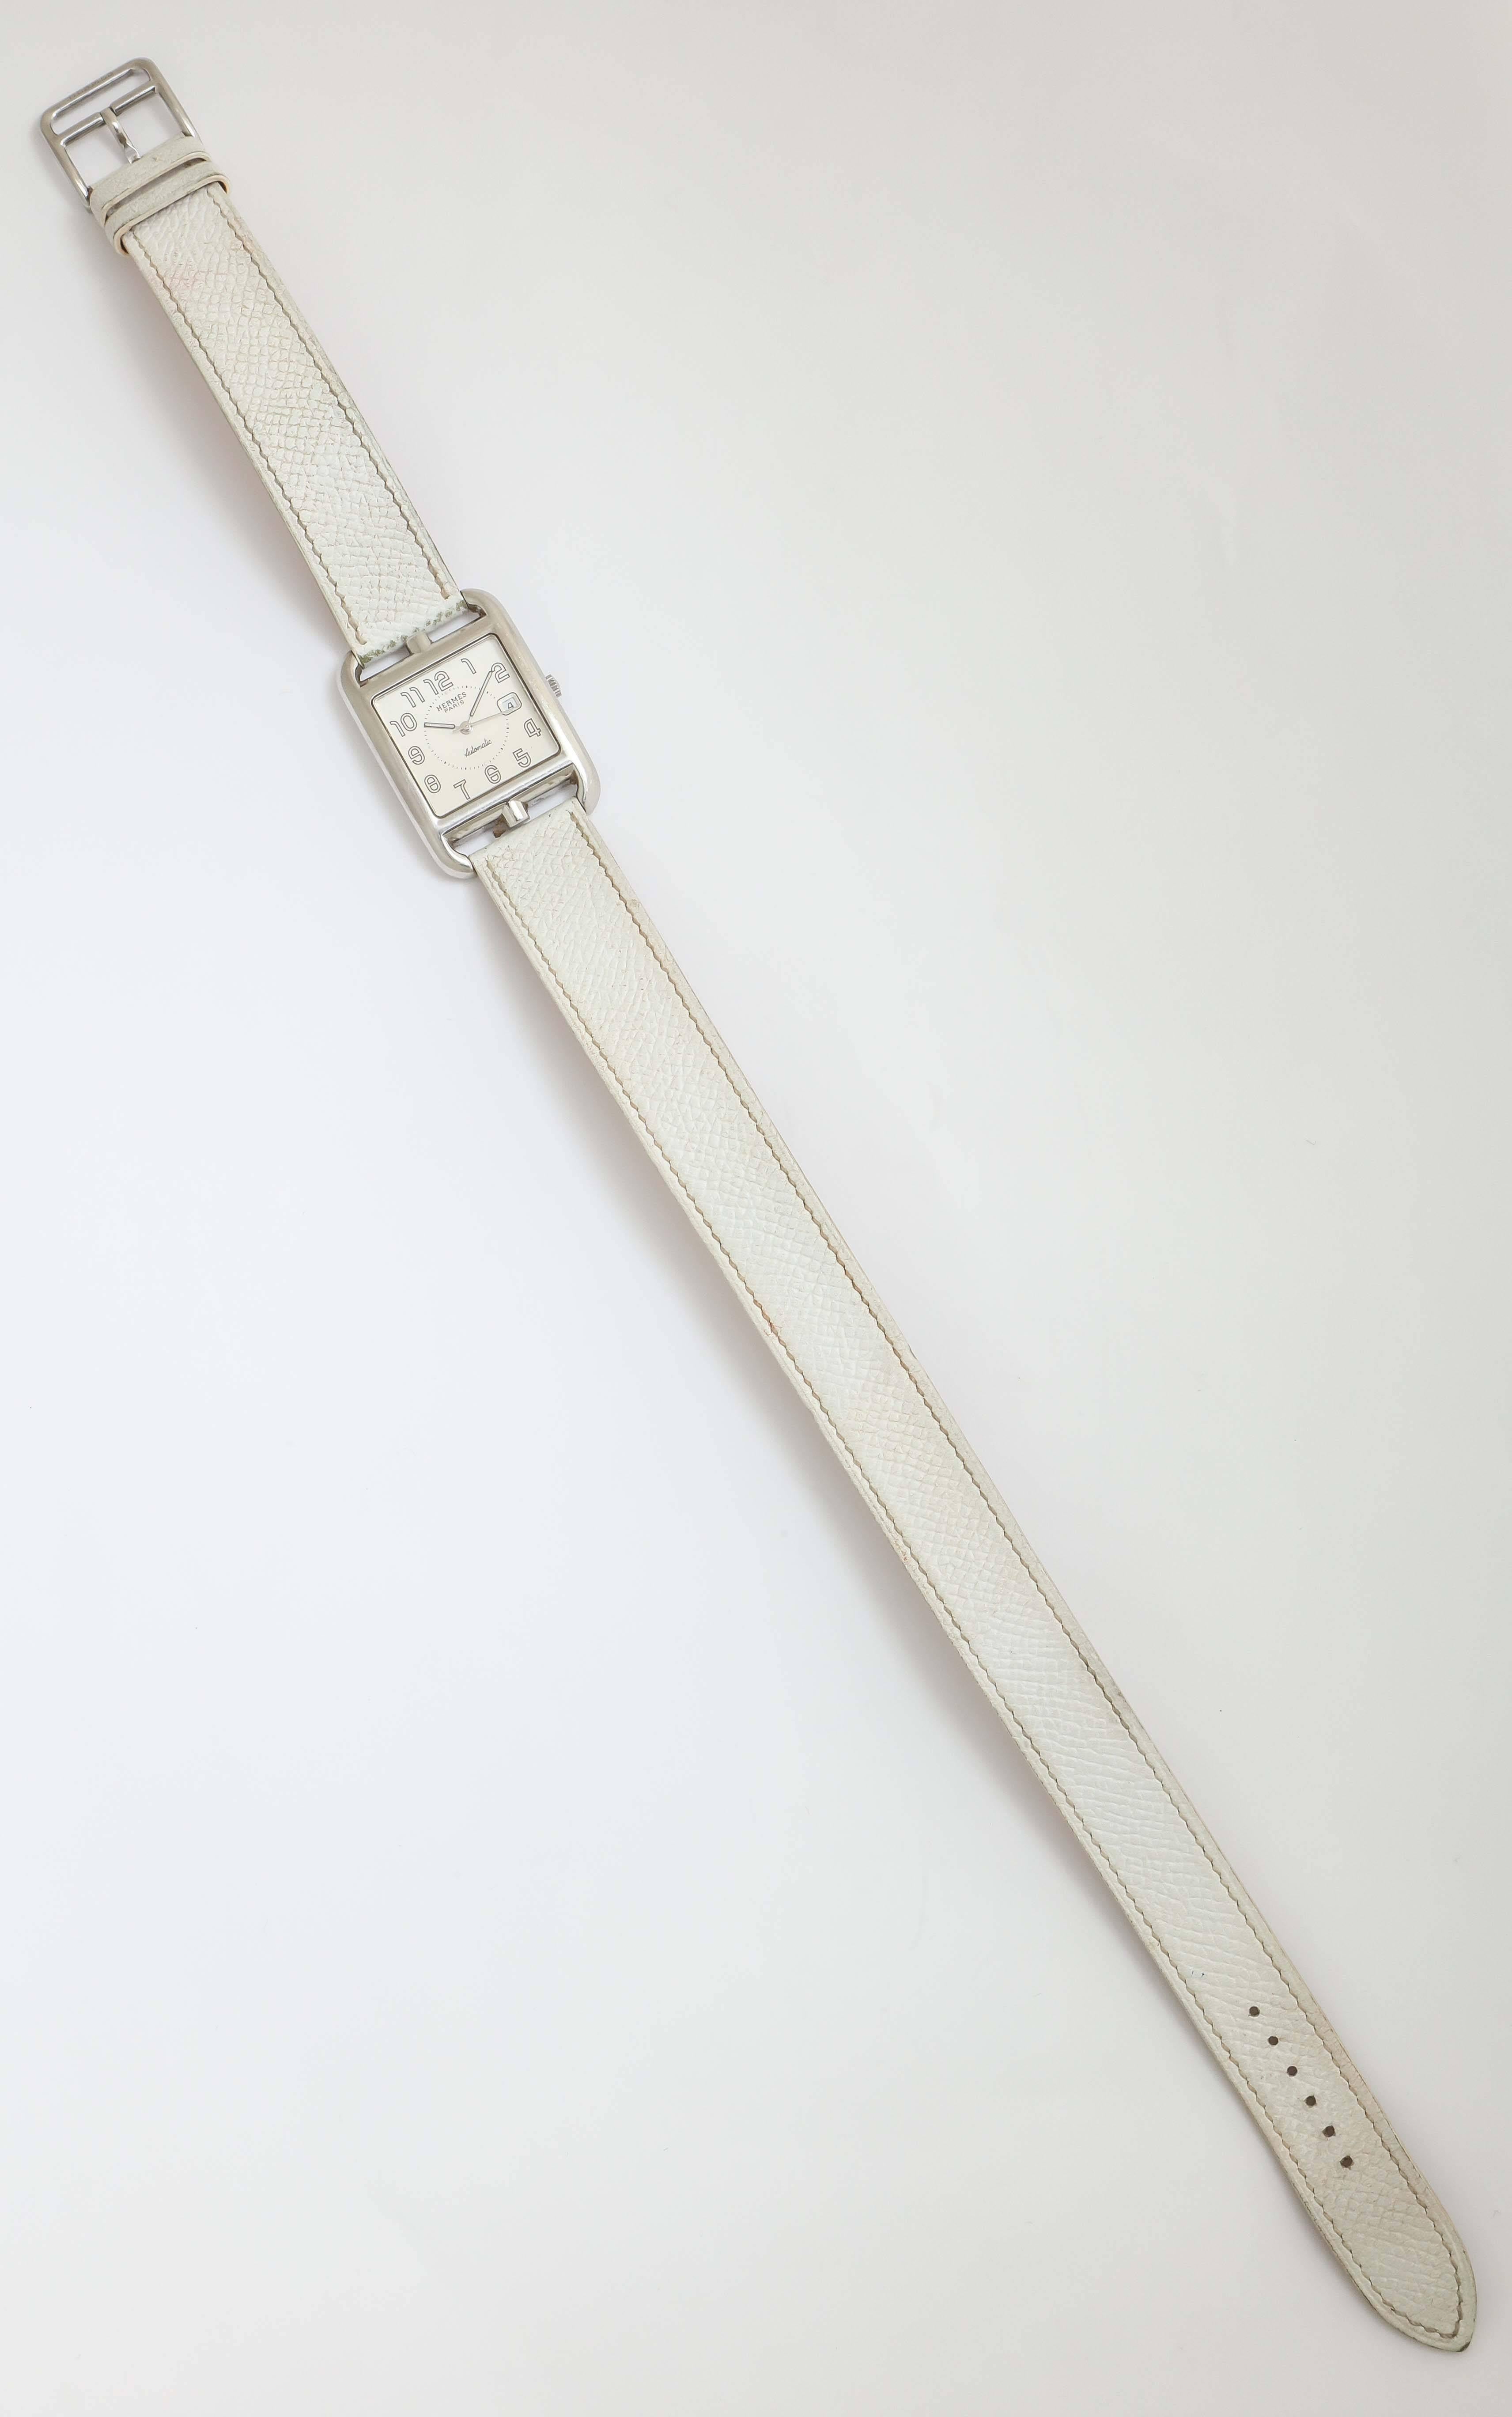 A fabulous white double strap Hermes automatic Cape Cod watch.